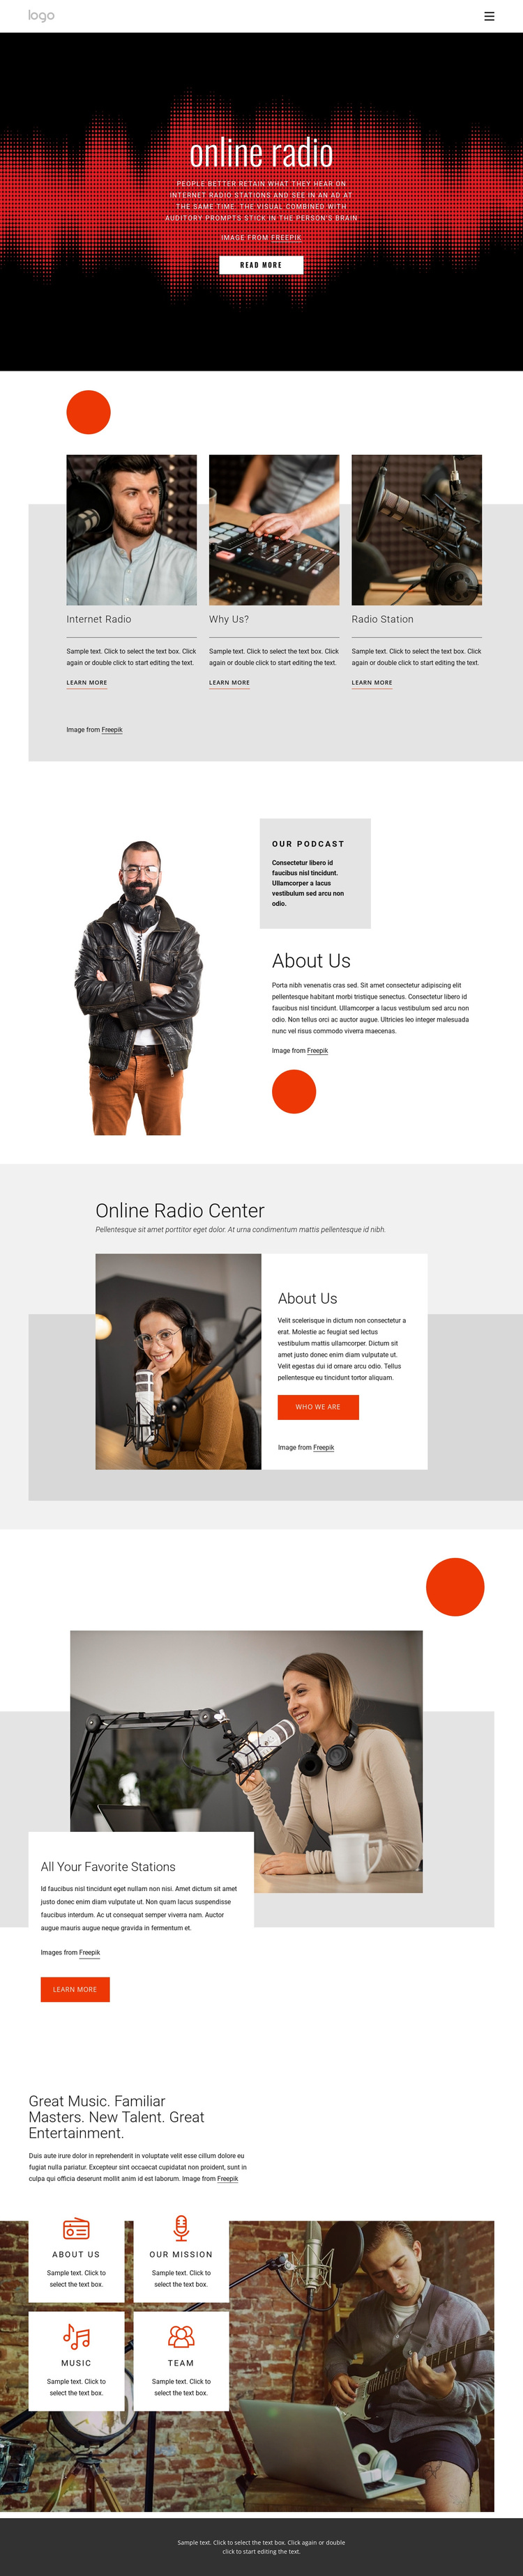 Online radio shows Joomla Page Builder